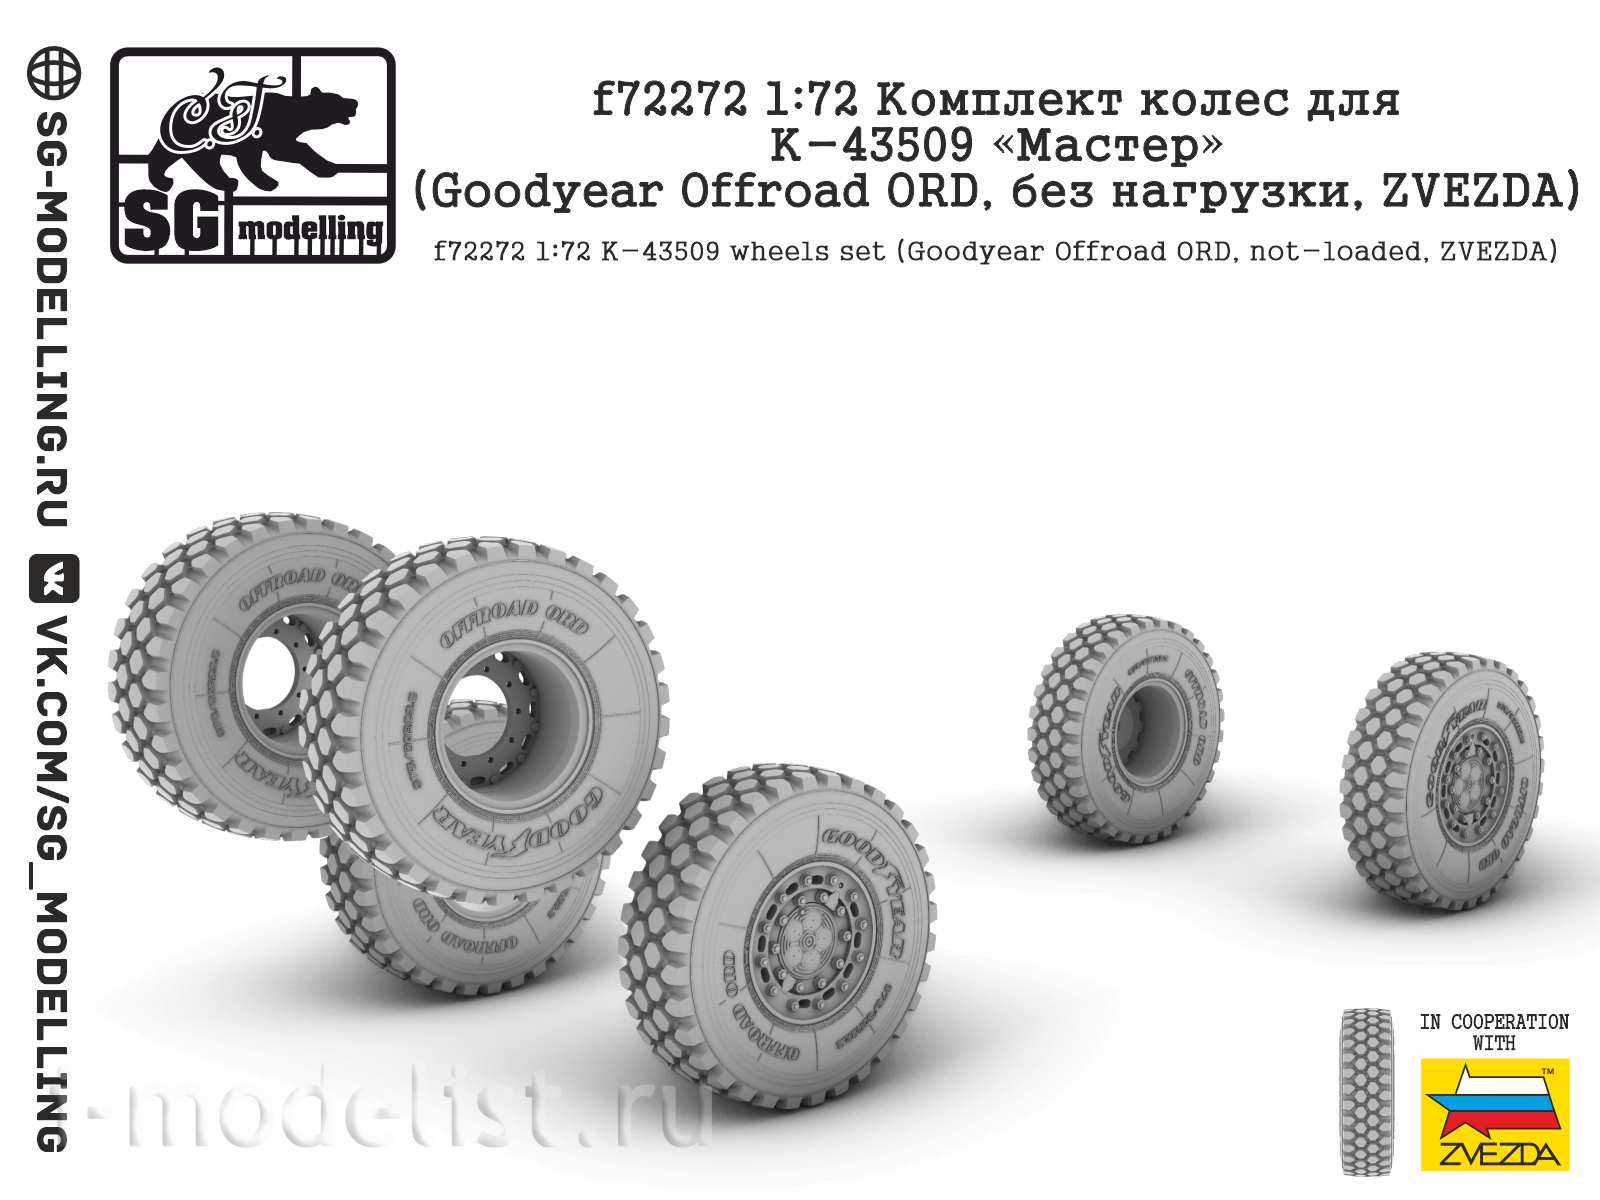 f72272 SG Modeling 1/72 Set of wheels for K-43509 (Goodyear Offroad ORD, no load, ZVEZDA)